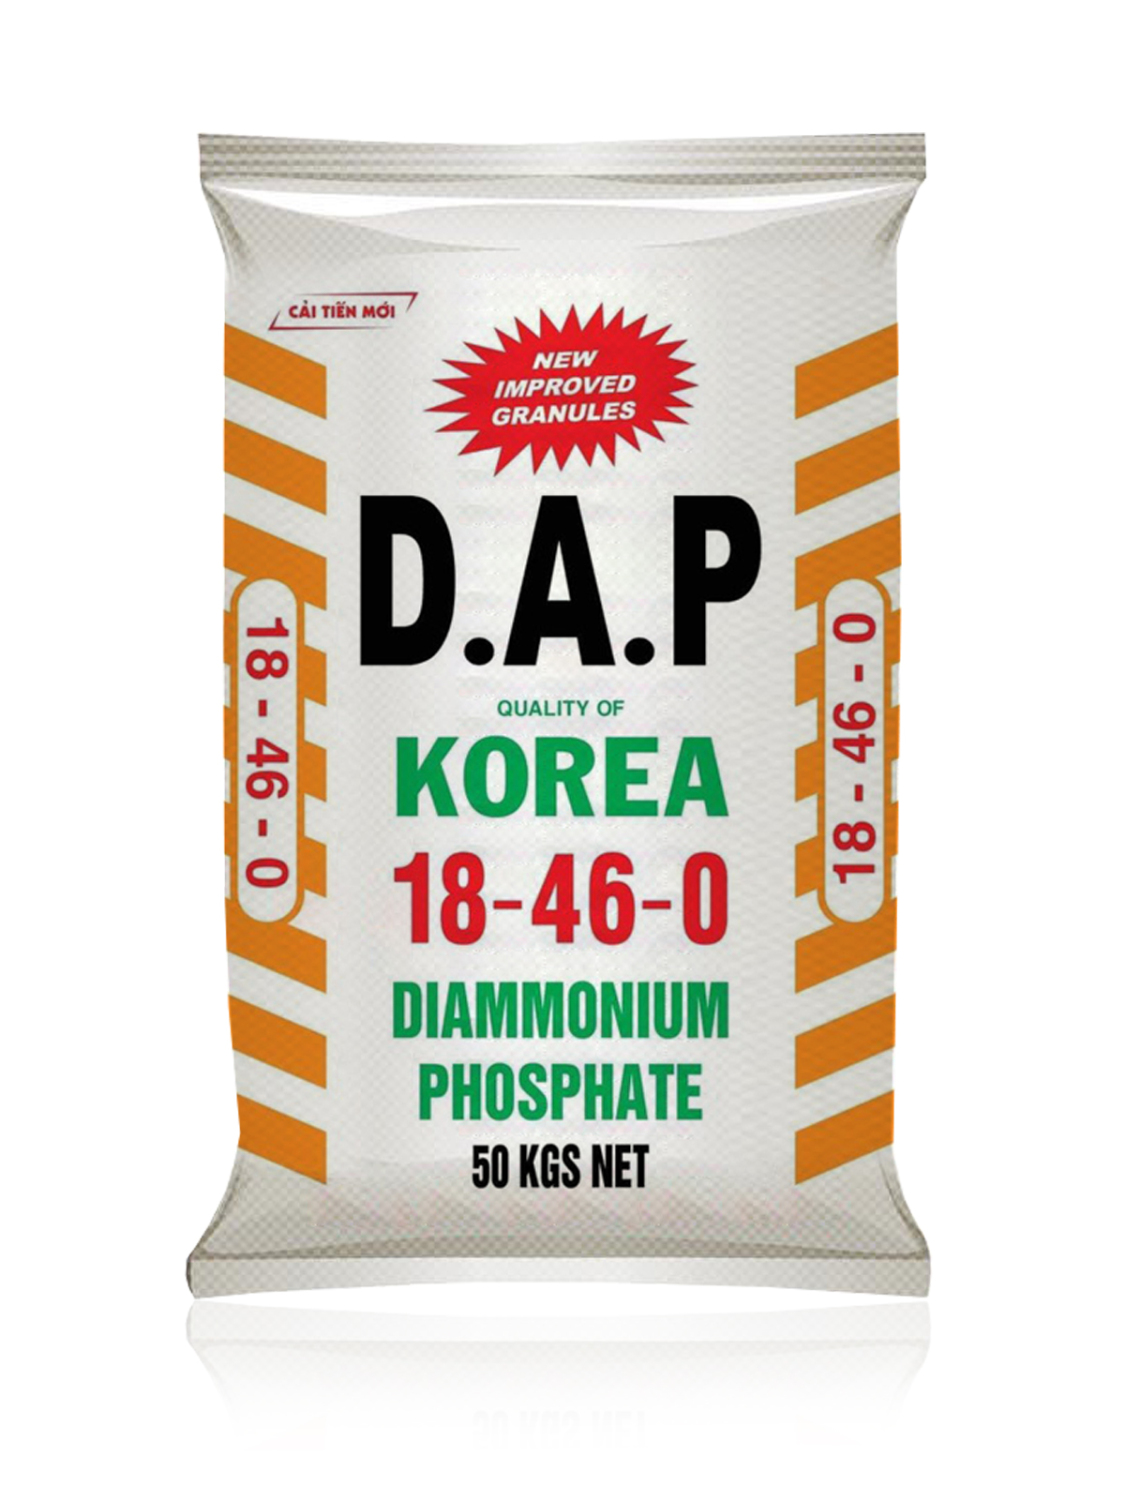 DAP Hàn Quốc